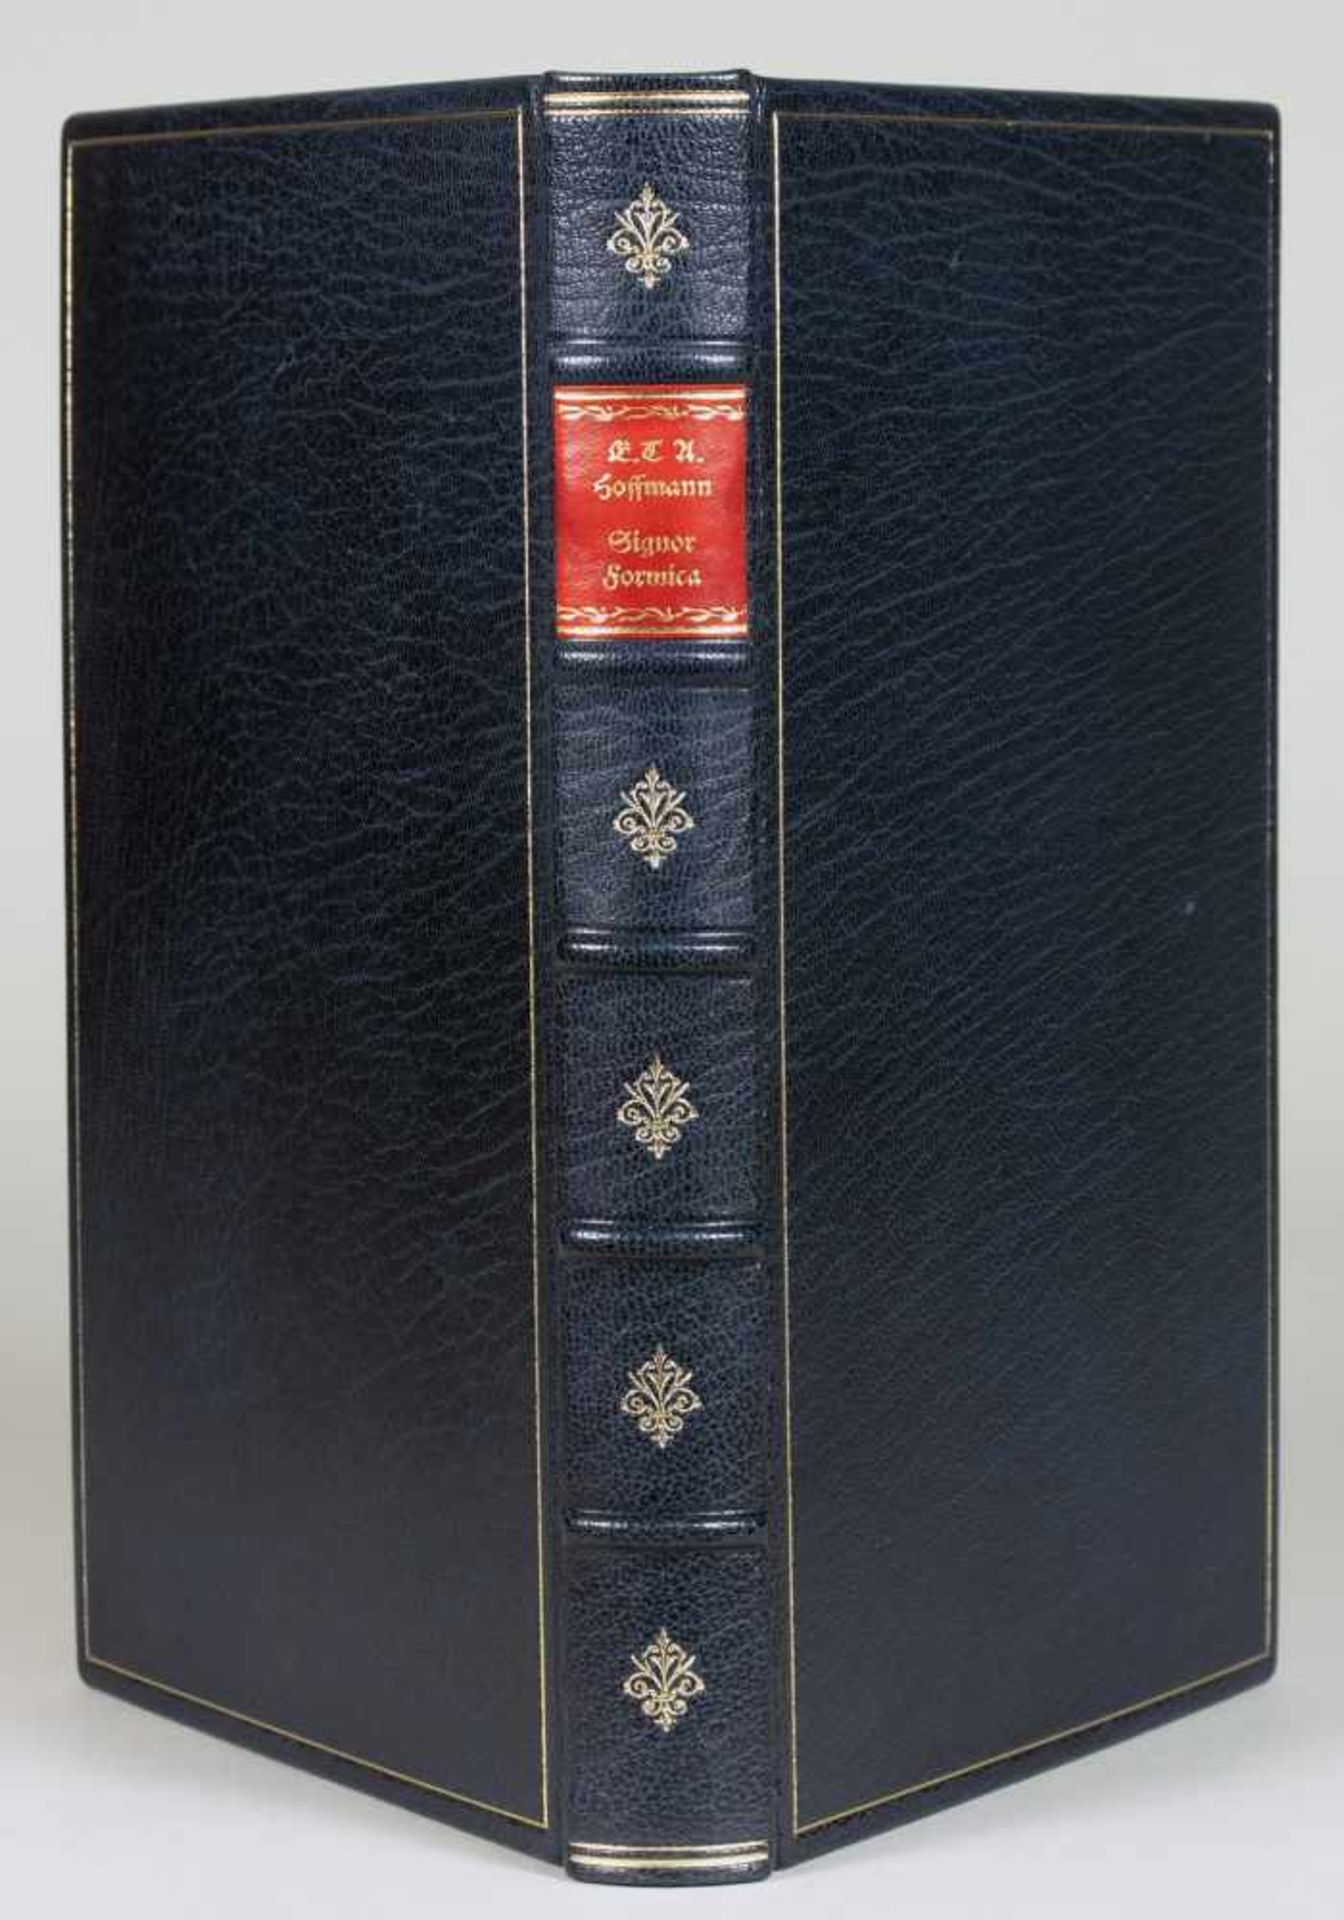 The Bear Press - E. T. A. Hoffmann. Signor Formica. Radierungen von Caspar Walter Rauh. Bayreuth